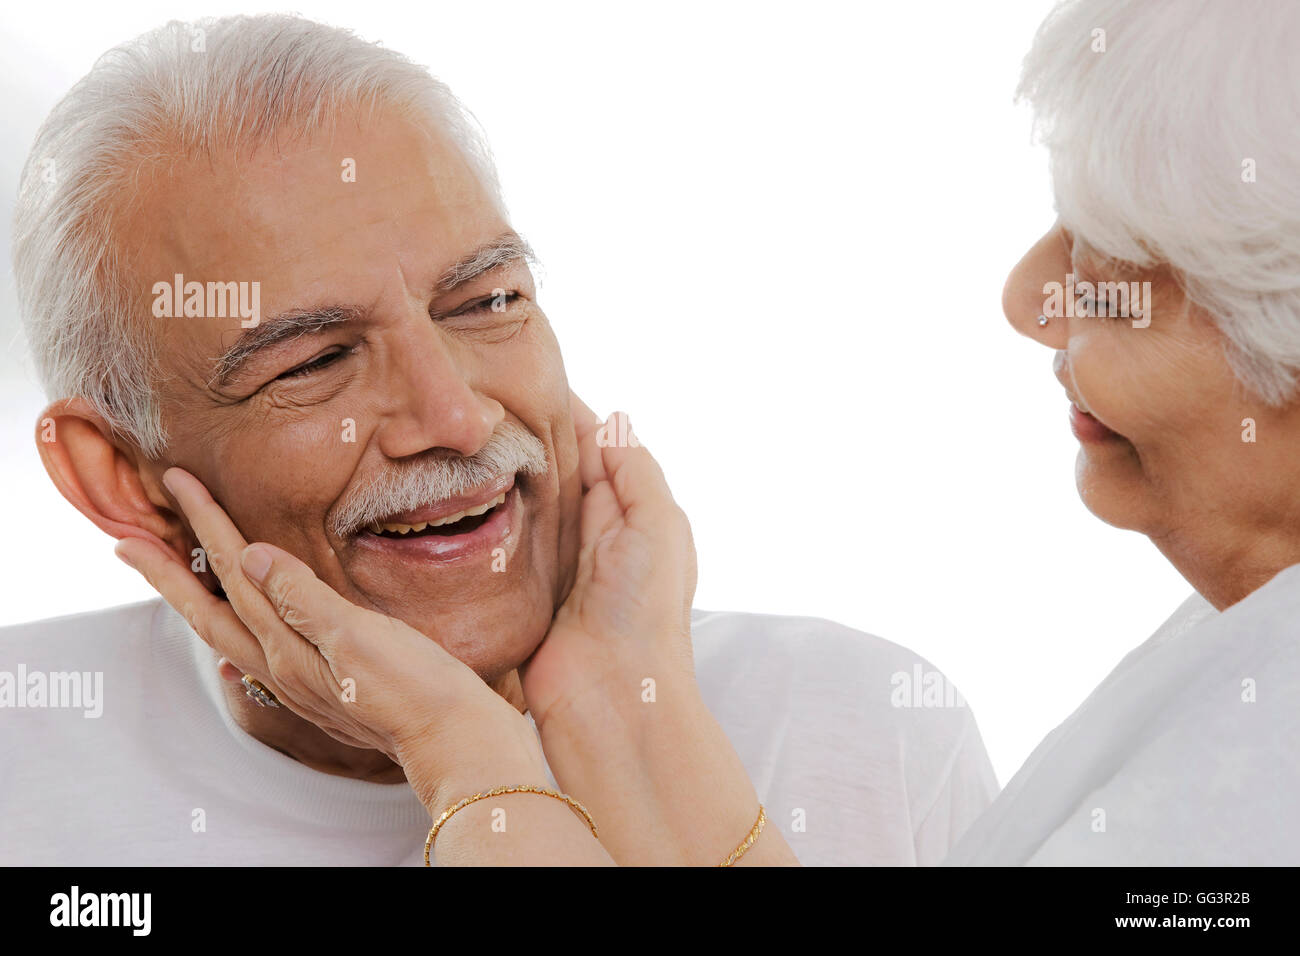 Old man smiling Stock Photo